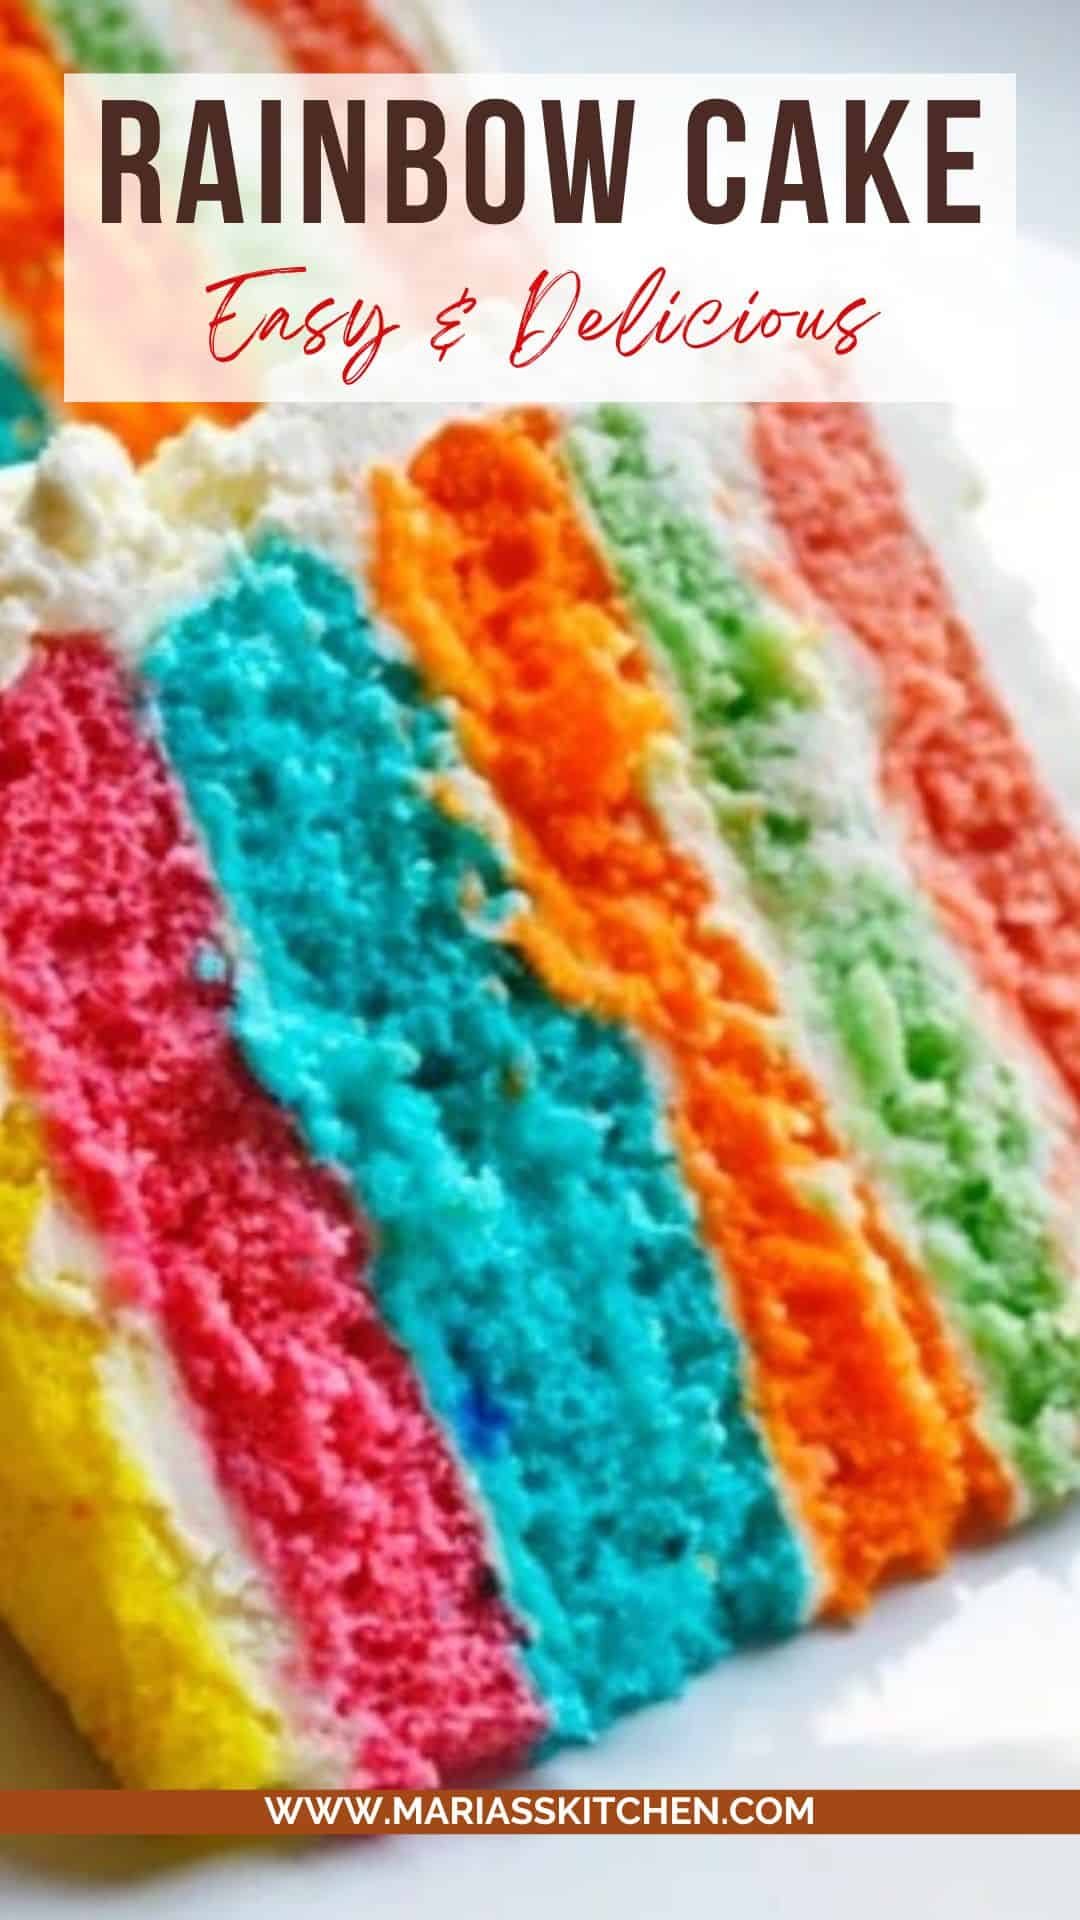 Best Rainbow Unicorn Cake Recipe  How to Make a Rainbow Unicorn Cake   Parade Entertainment Recipes Health Life Holidays